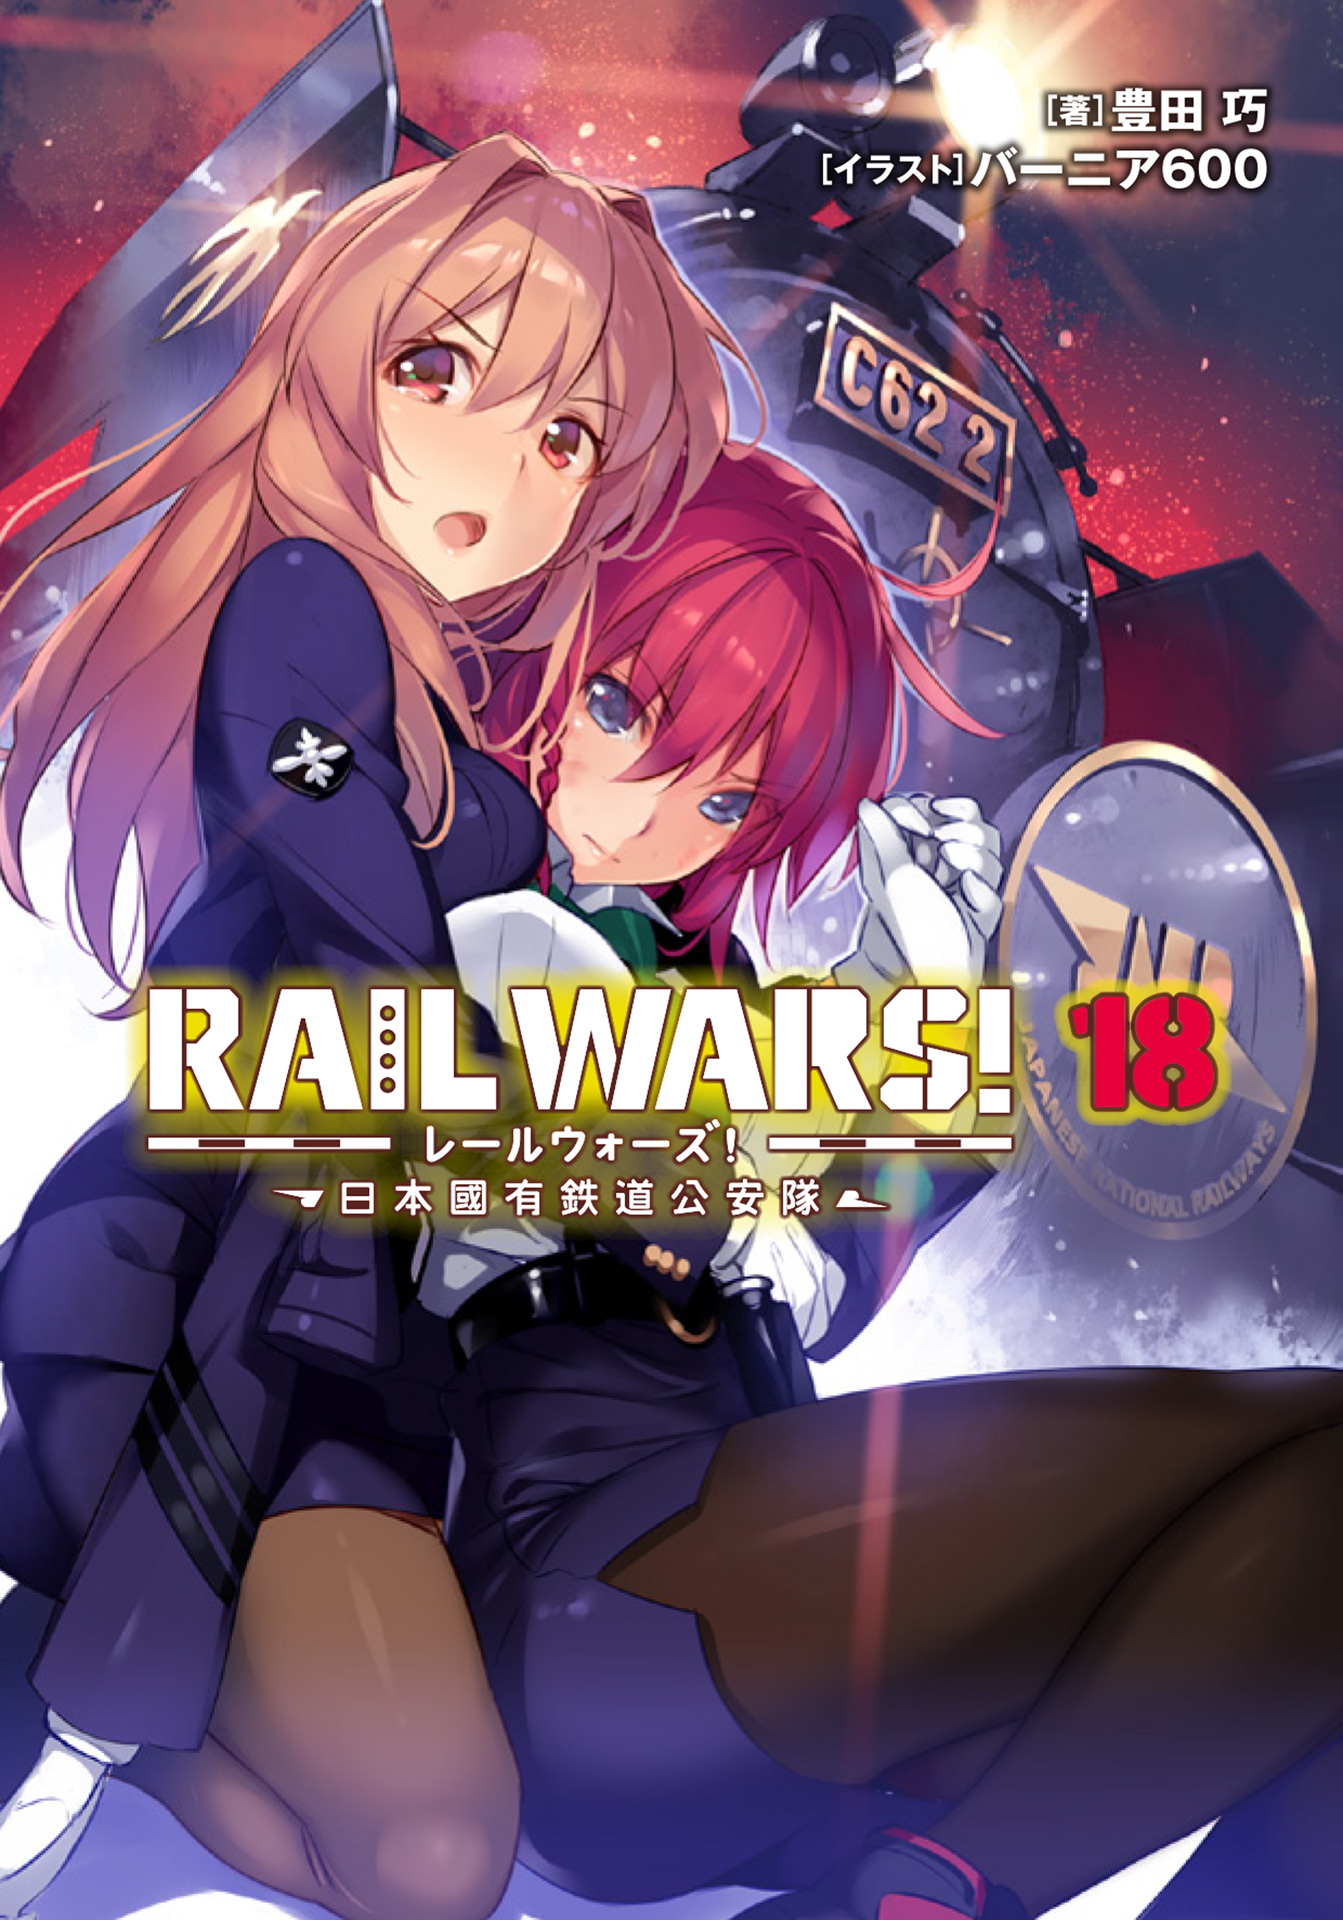 rail wars episode 1 english dub gogoanime